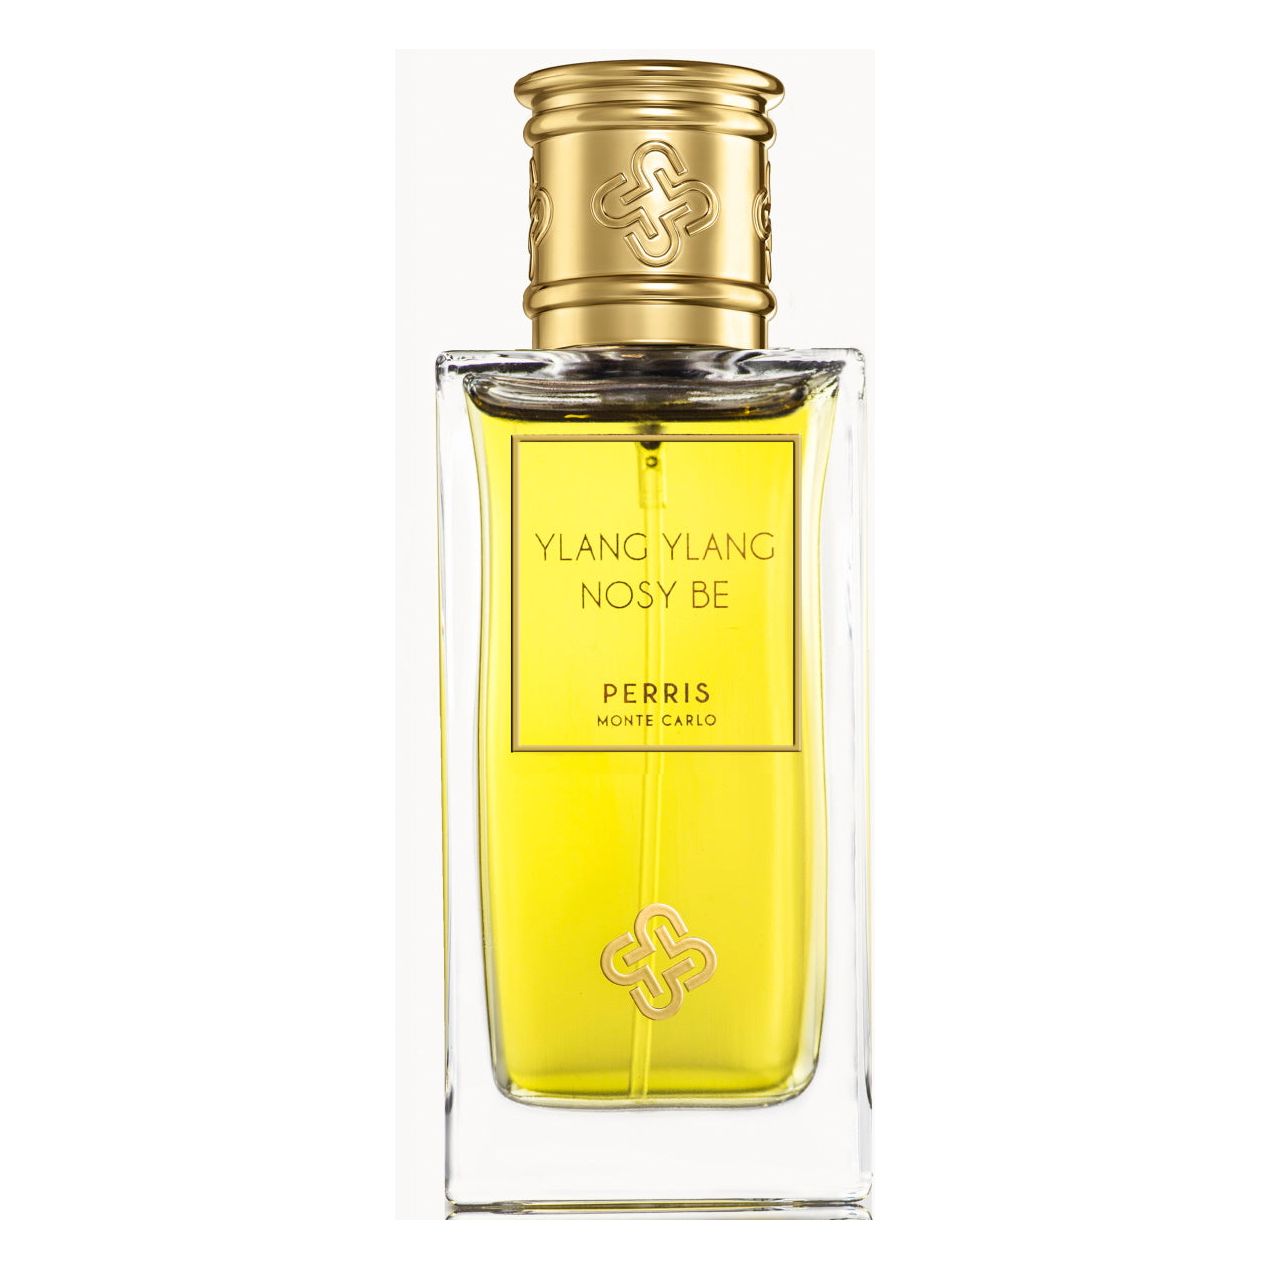 Perris Monte Carlo - Ylang Ylang Nosy Be - Extrait de Parfum